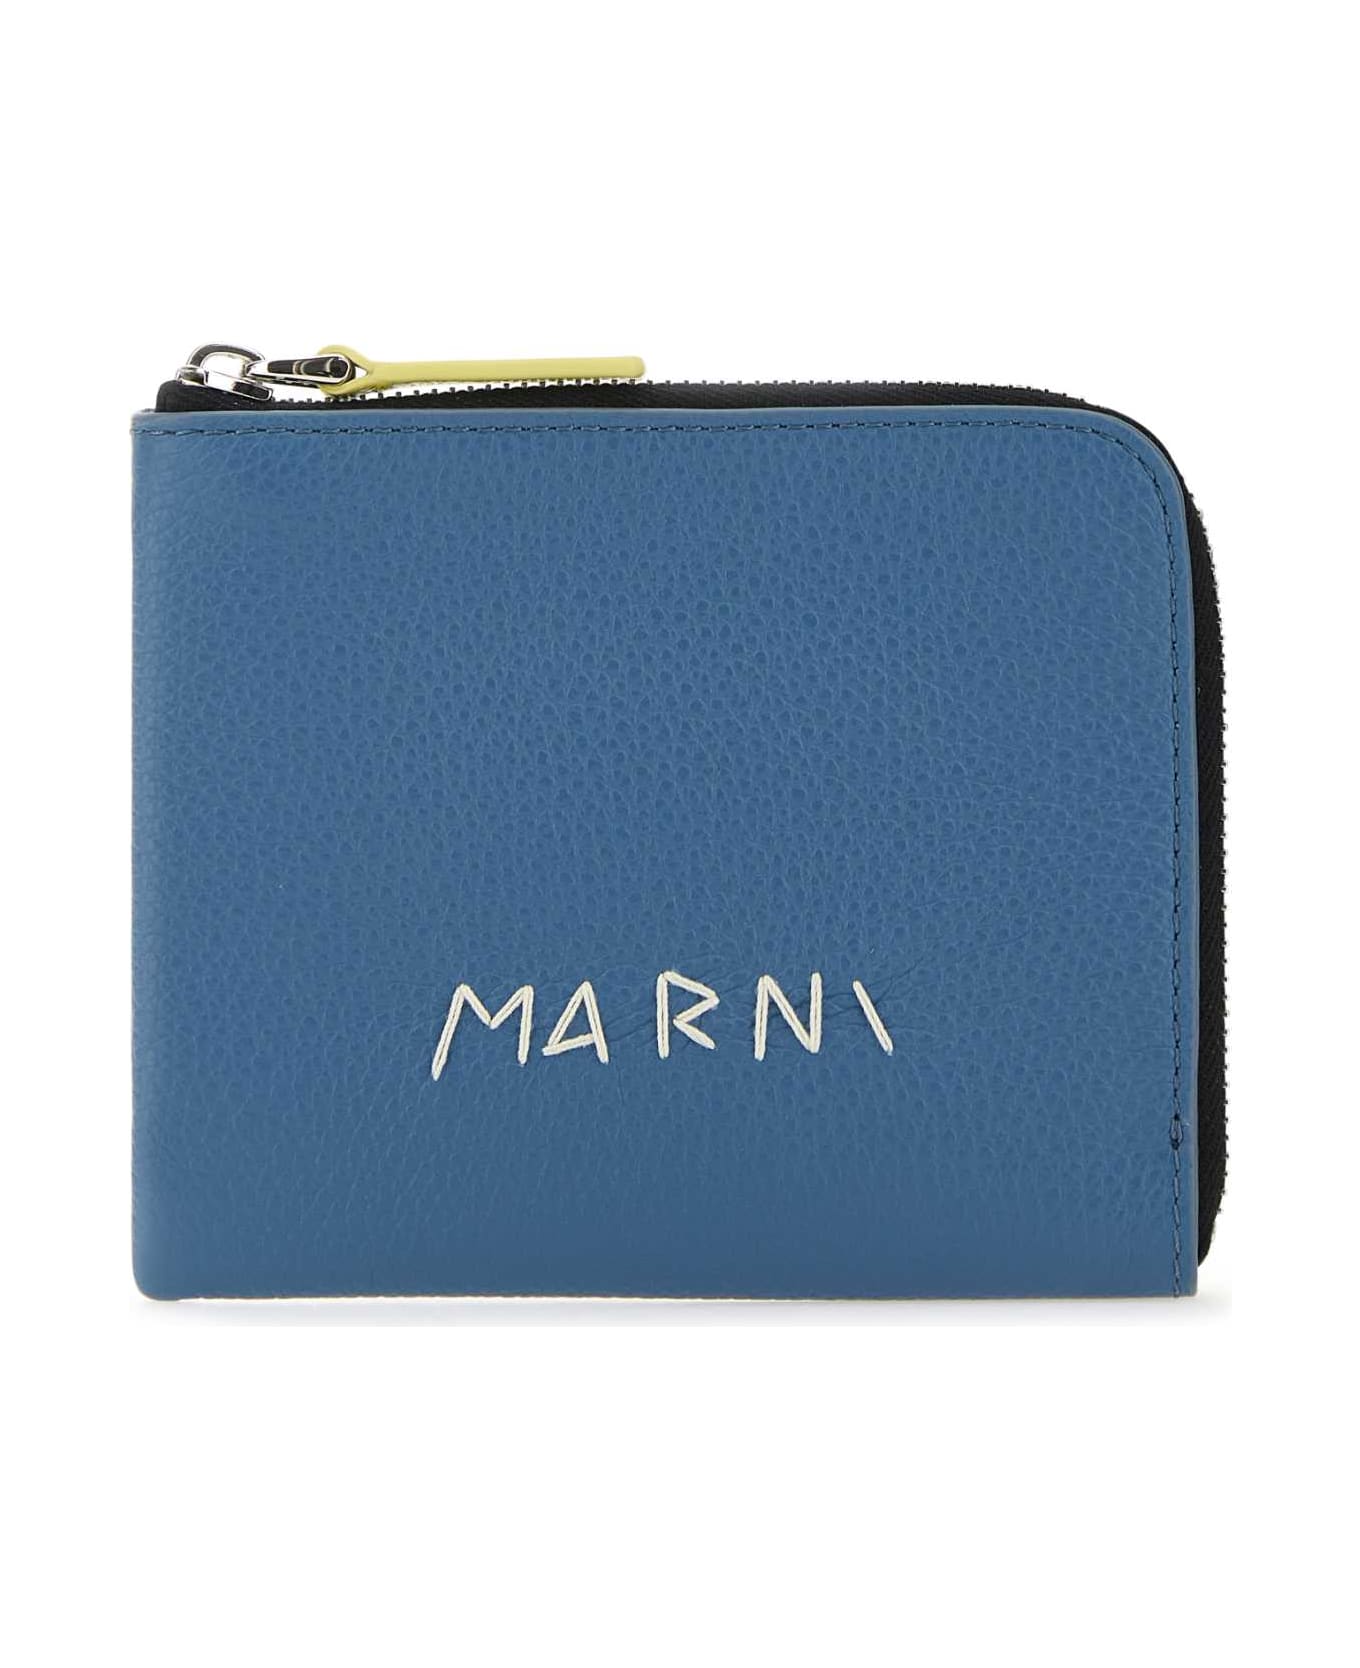 Marni Slate Blue Leather Wallet - OPAL